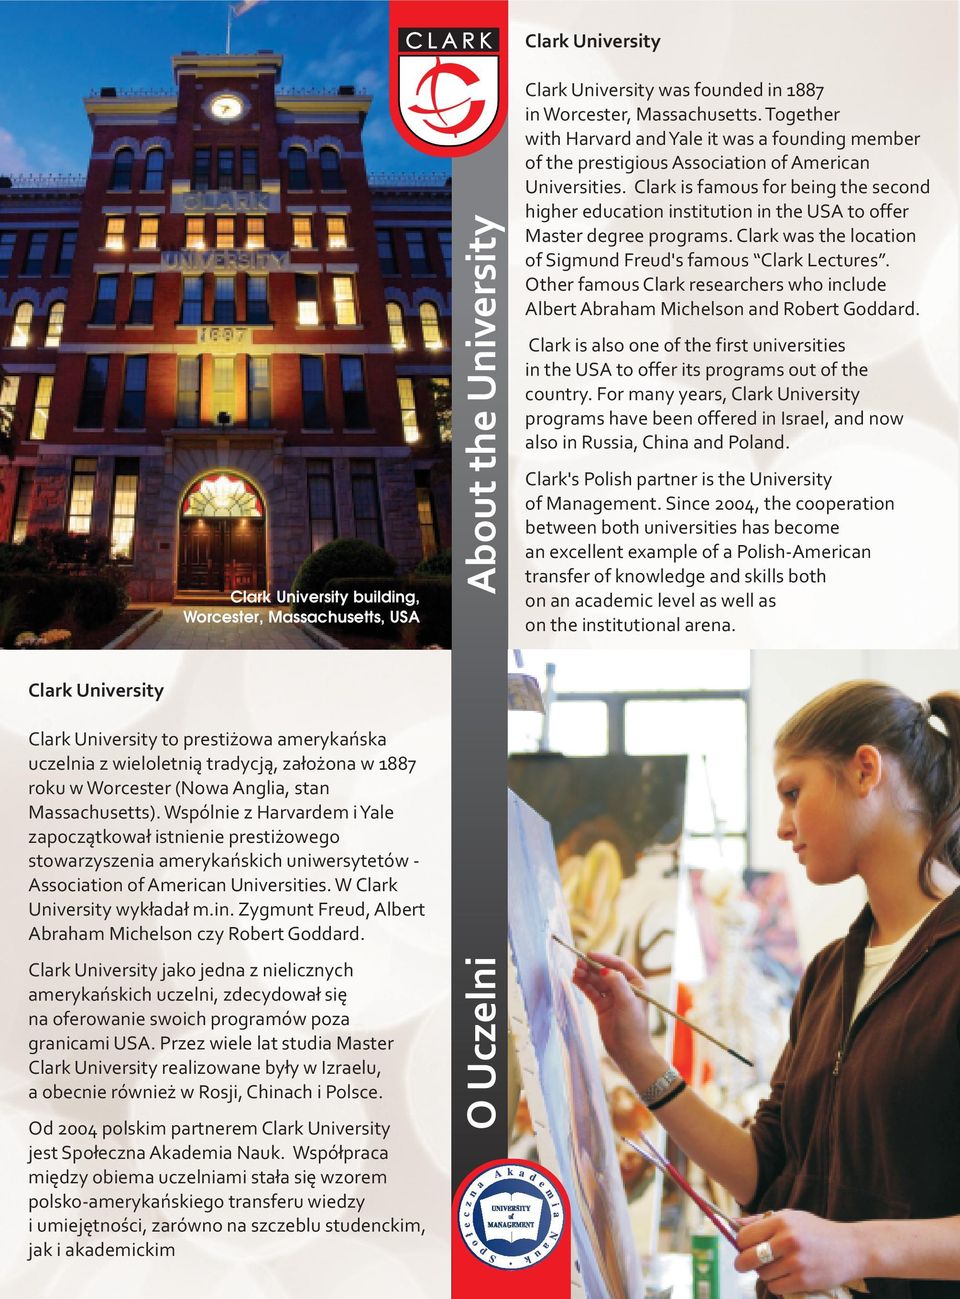 Od 2004 polskim partnerem Clark University jest Społeczna Akademia Nauk.